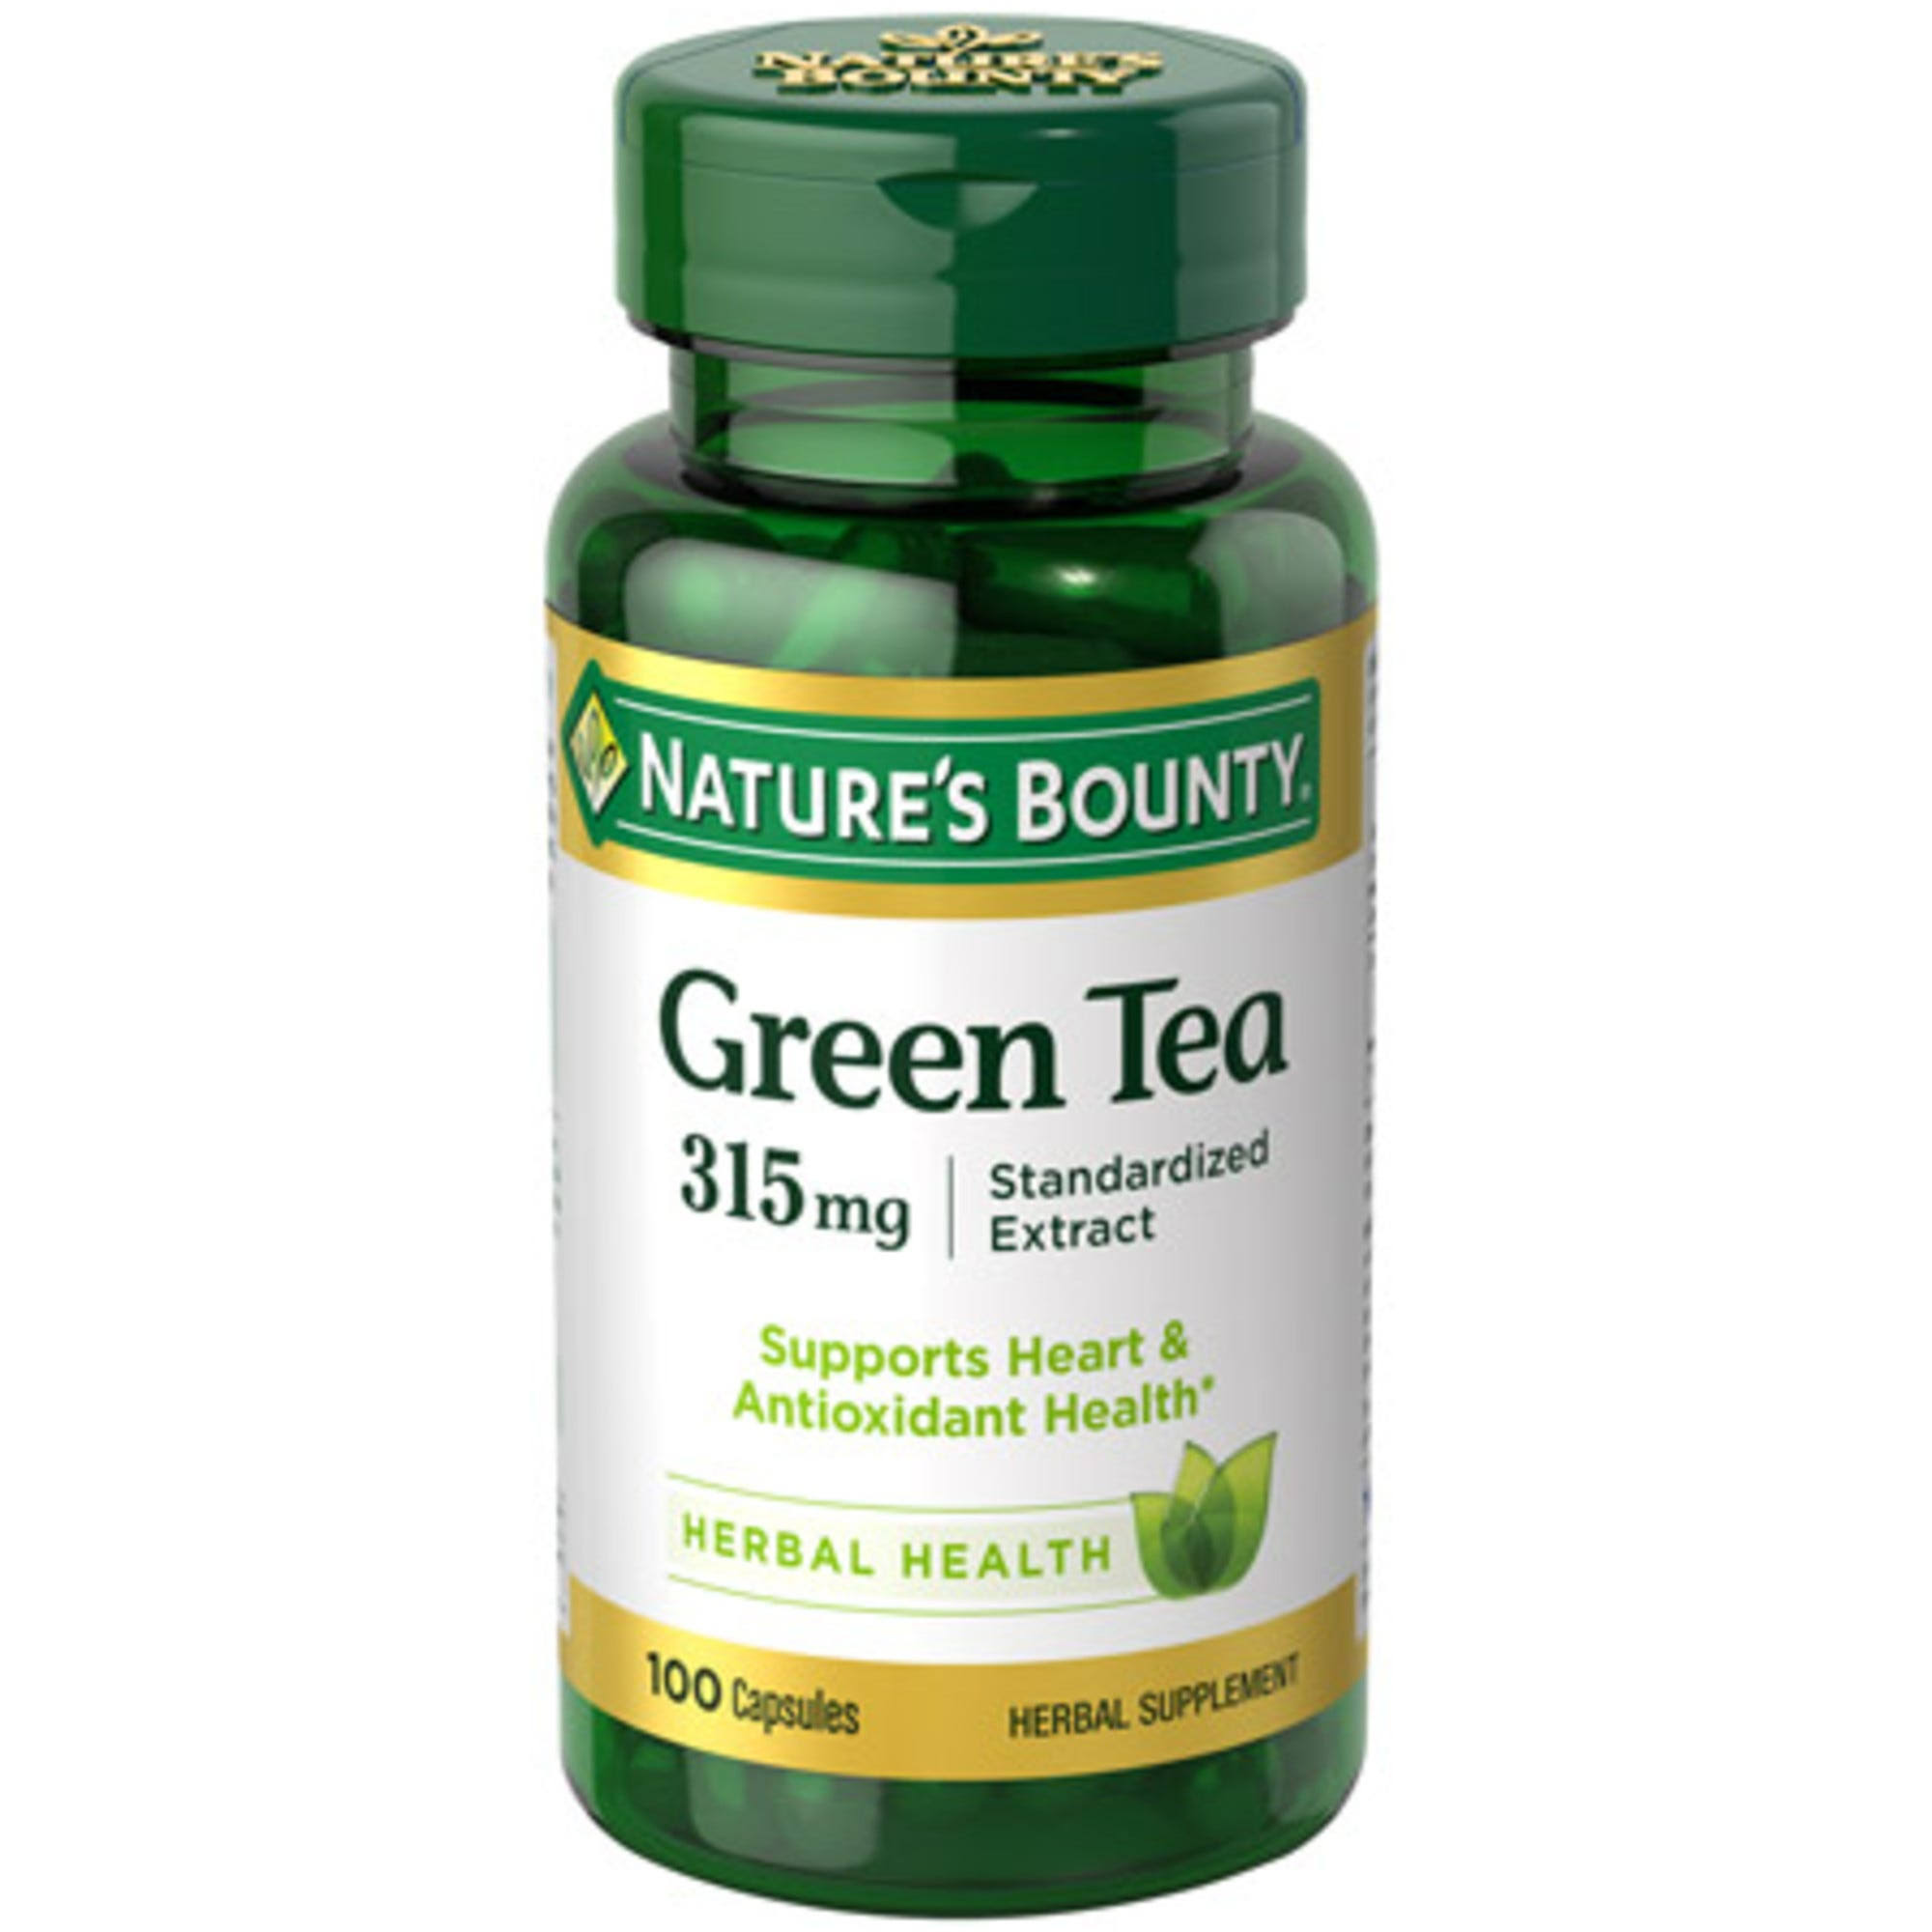 Nature's Bounty Green Tea Extract 315mg